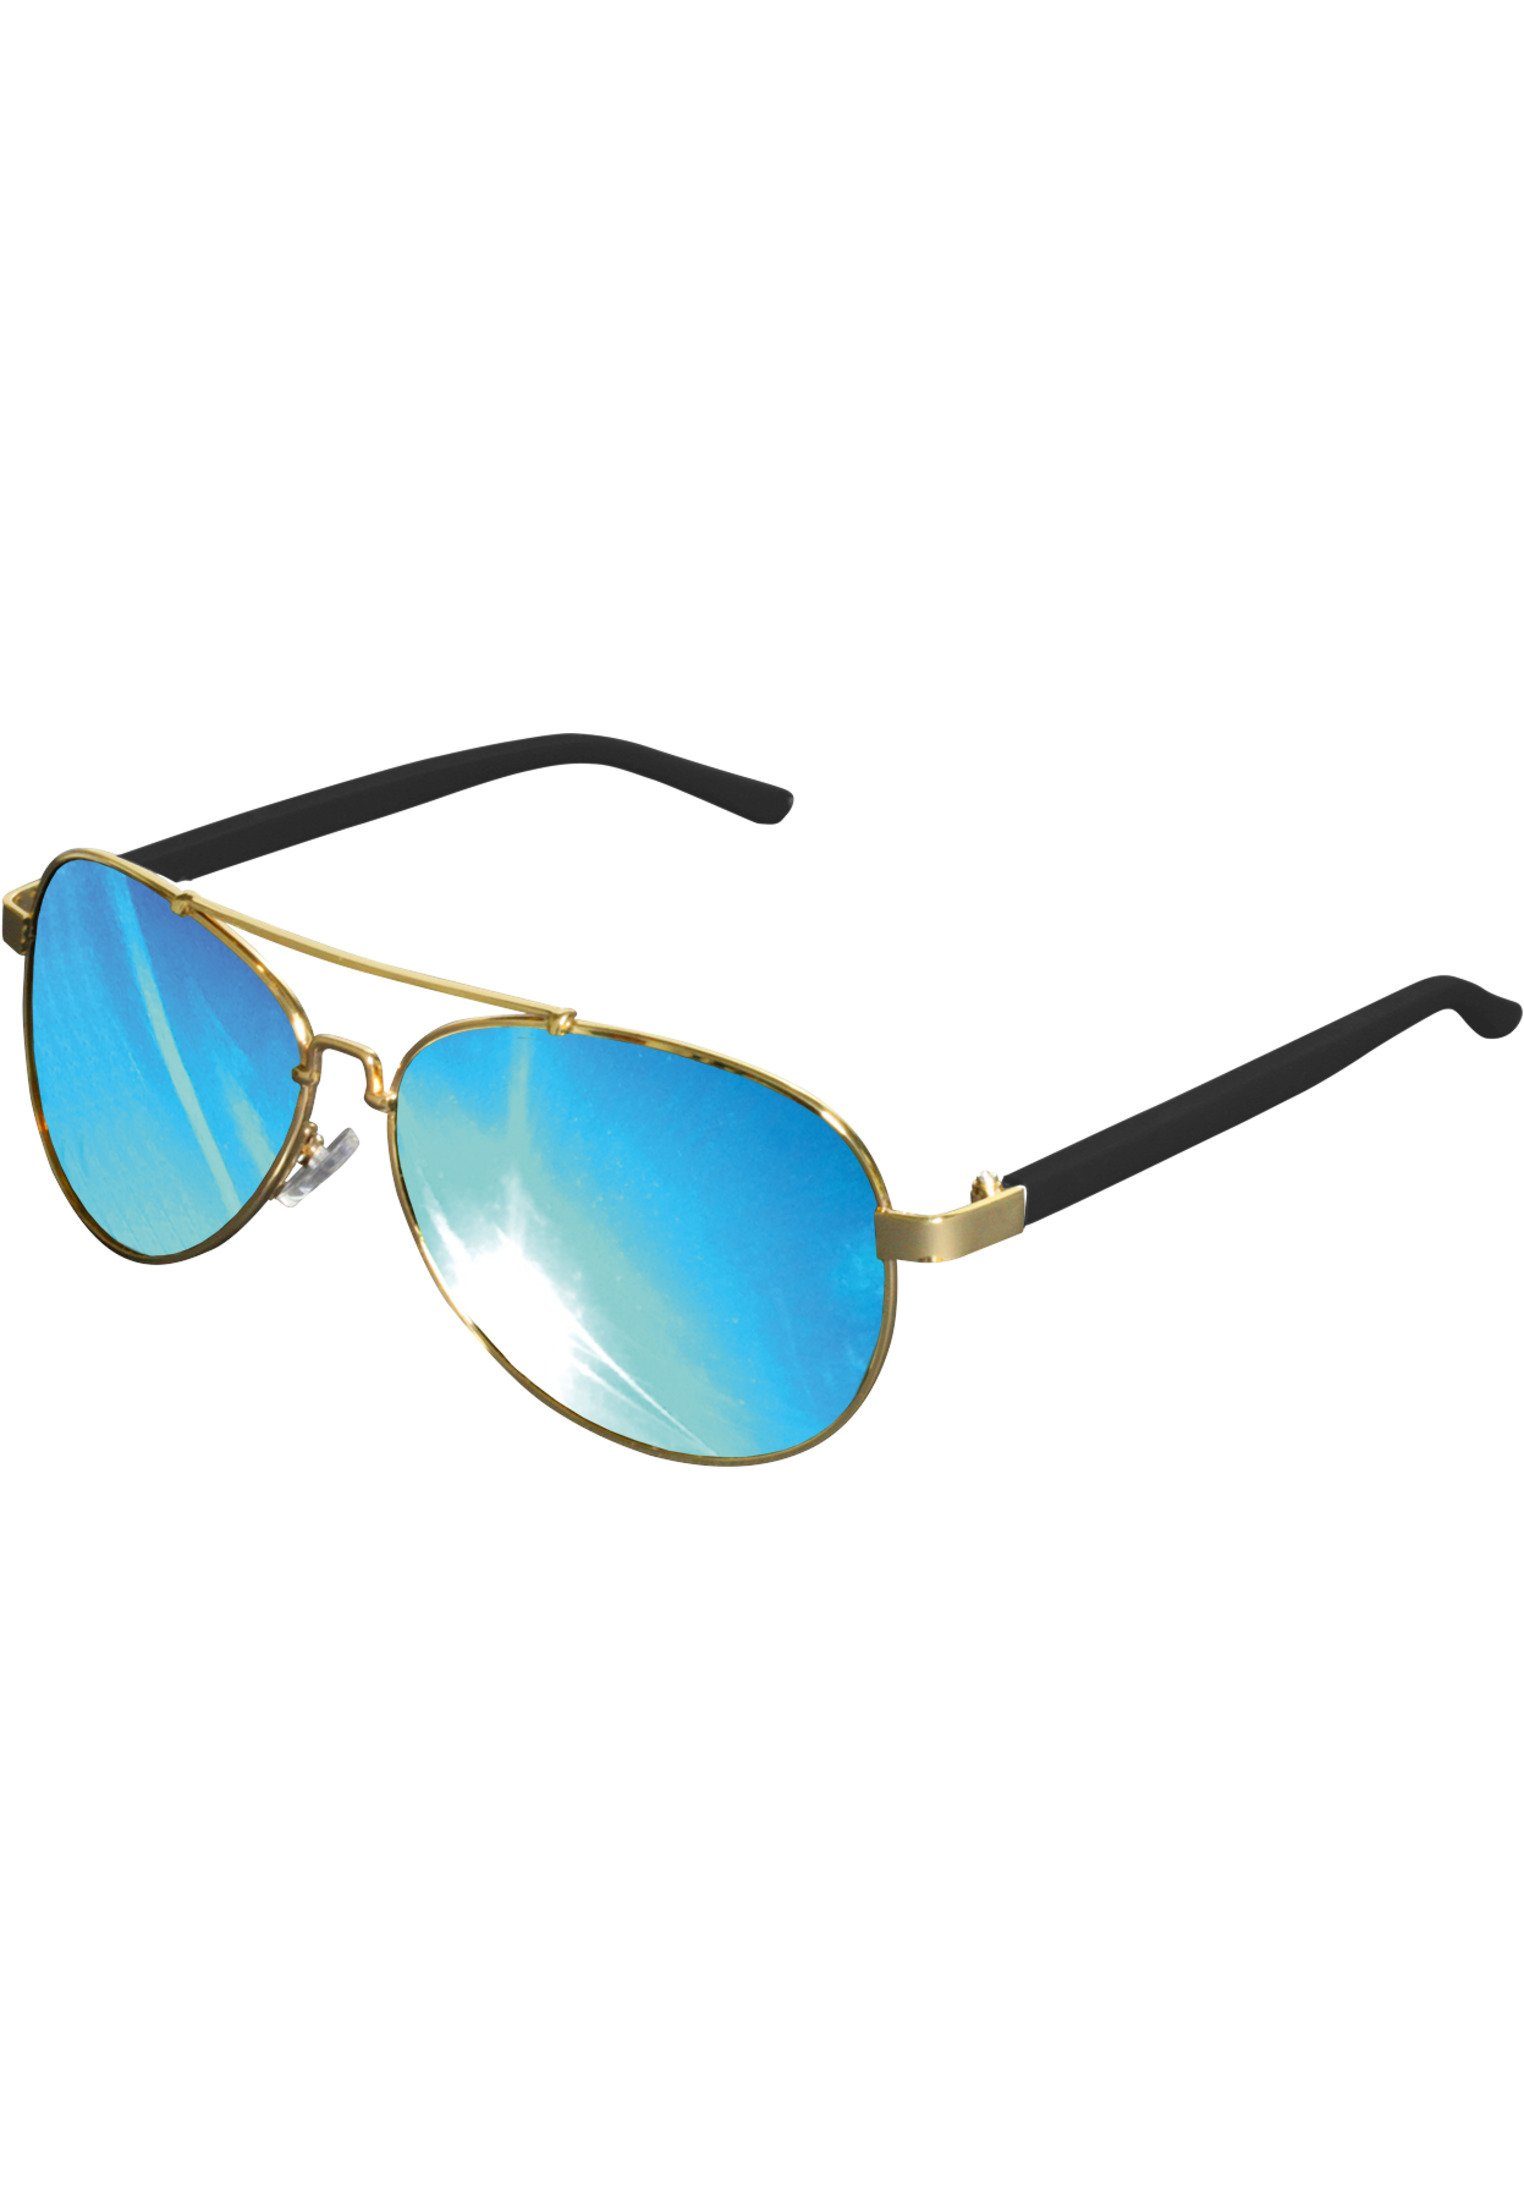 MSTRDS Sonnenbrille Accessoires Sunglasses Mumbo Mirror gold/blue